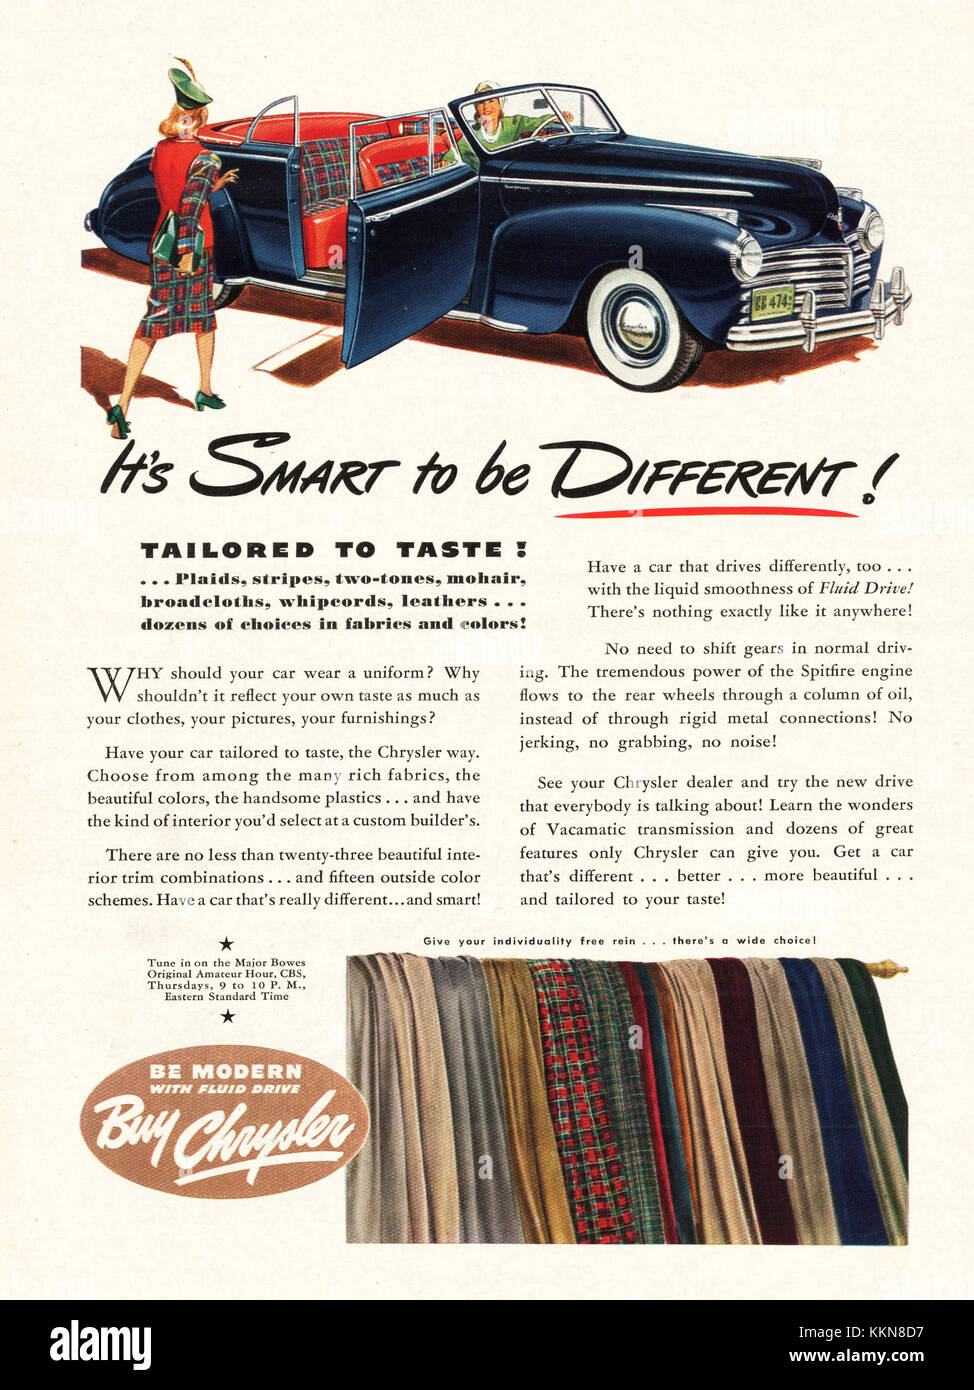 1941 U.S. Magazine Chrysler Car Advert Stock Photo